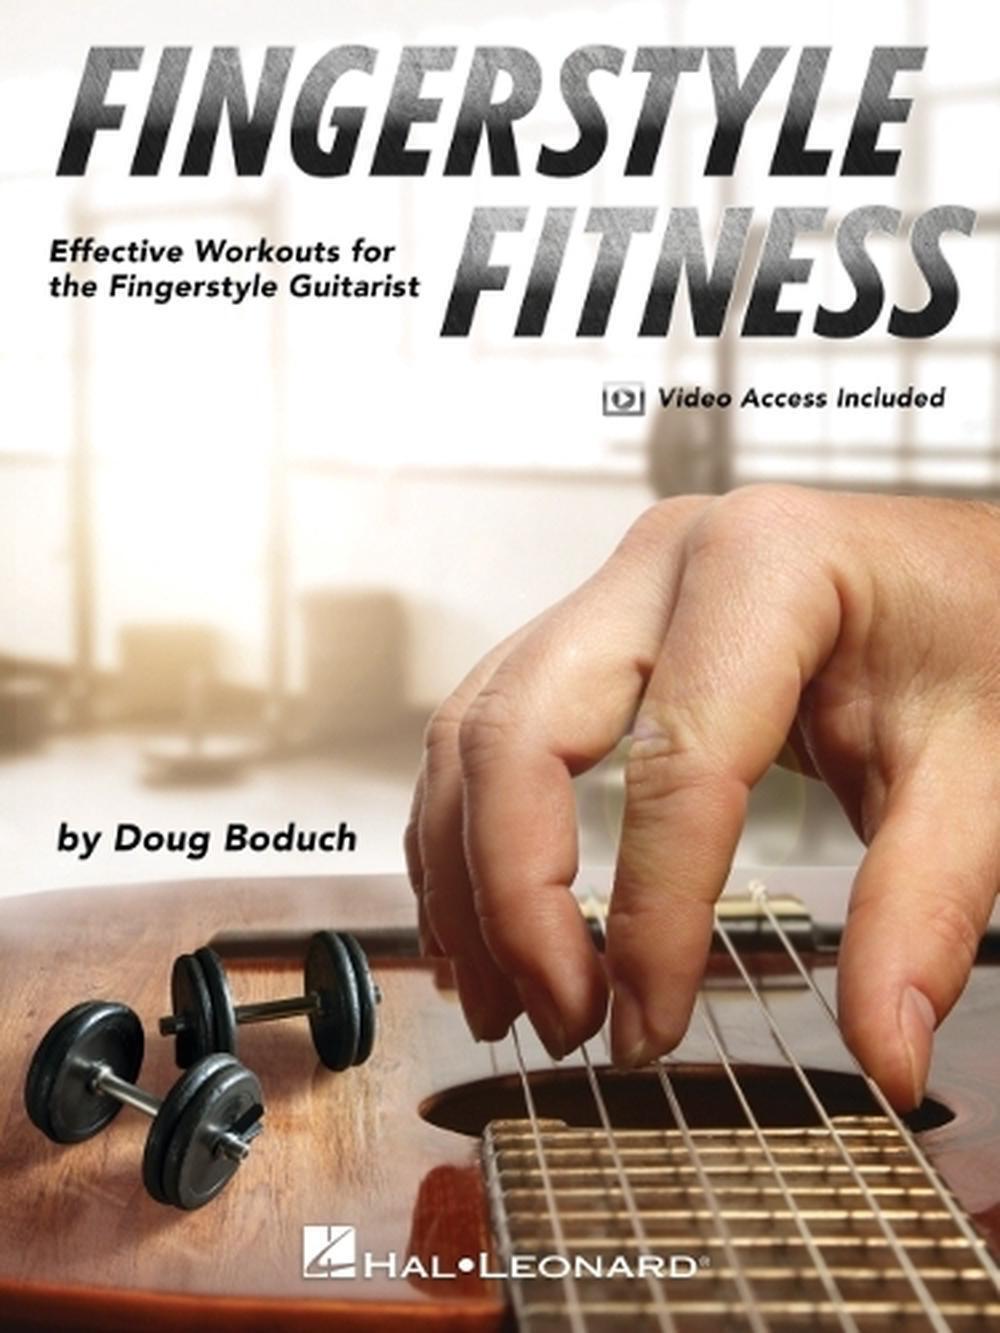 Boduch - Fingerstyle Fitness - Fingerstyle Guitar/Video Access Online Hal Leonard 323629